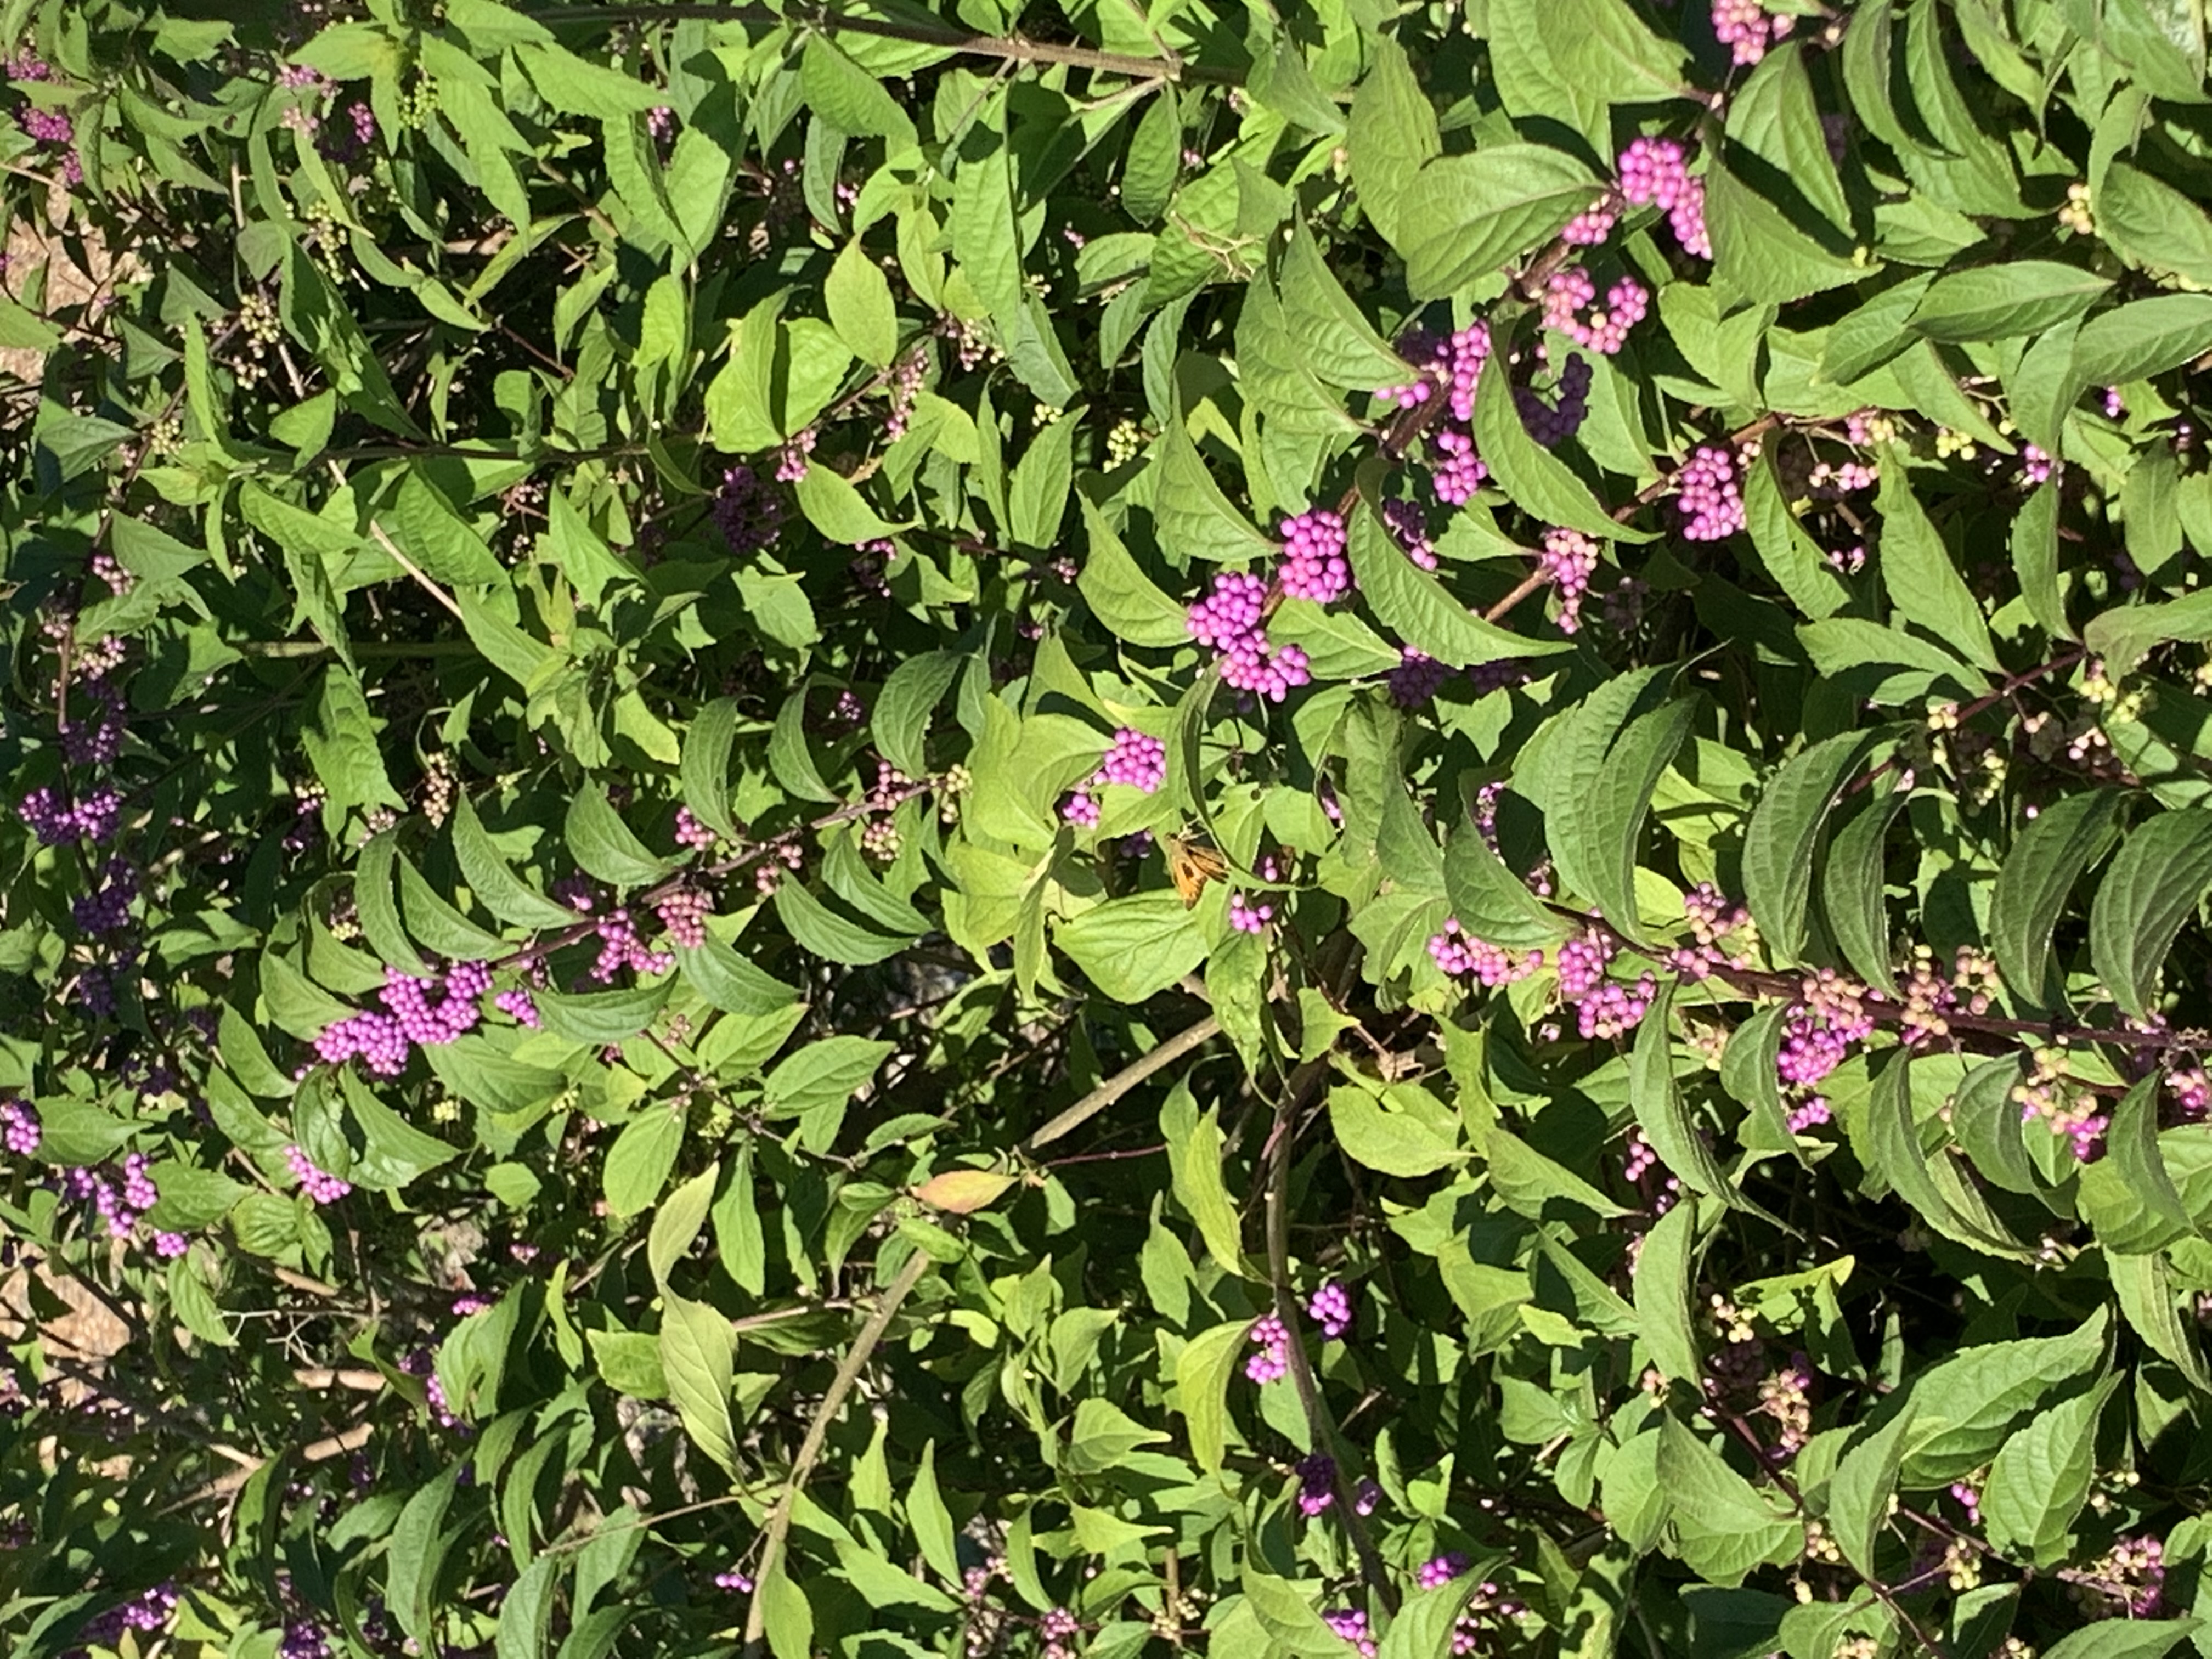 Bright purple berries along a plant's stalk